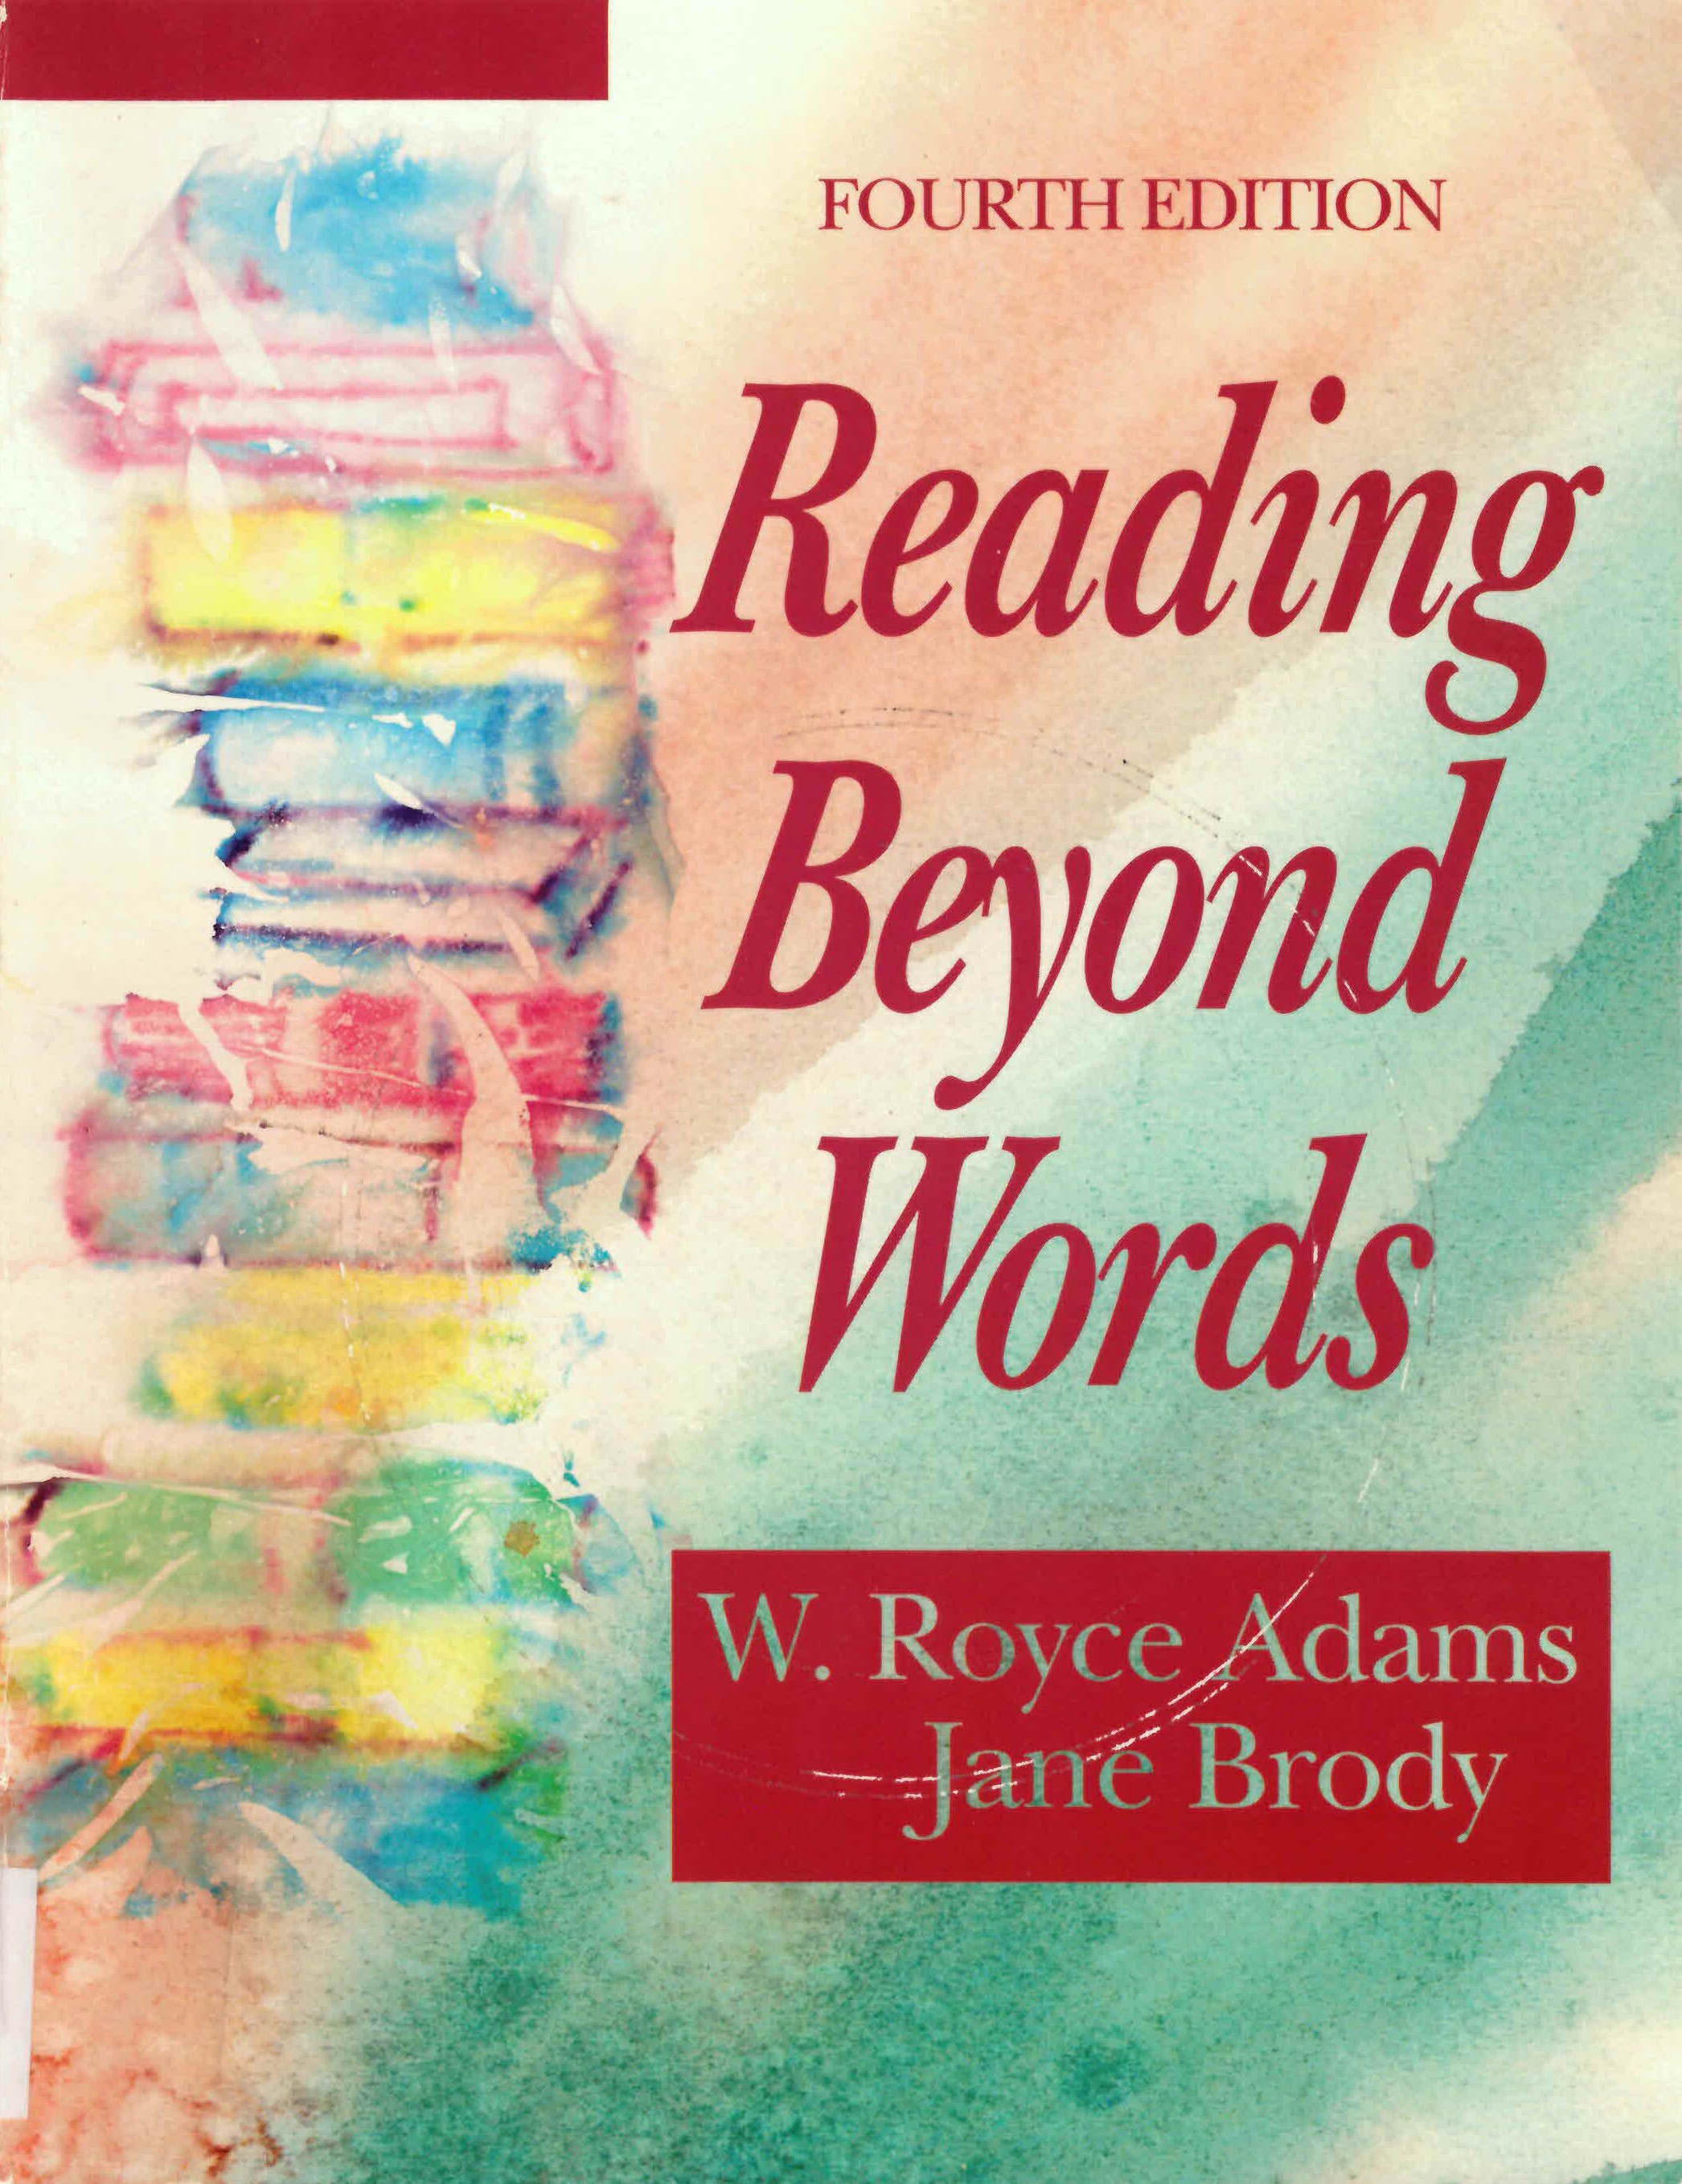 Reading beyond words